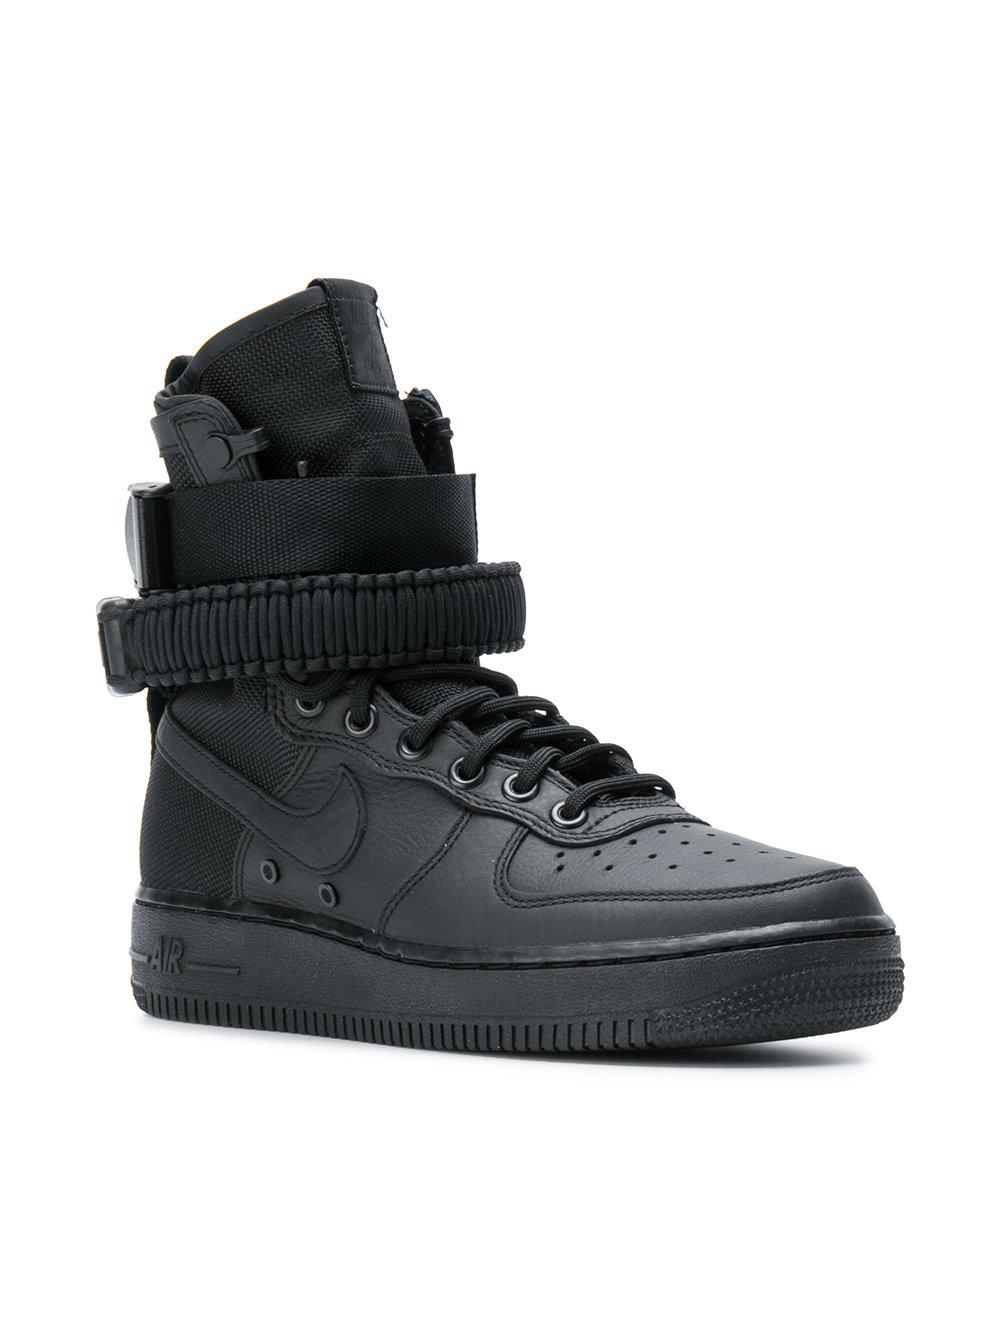 Nike Leather Sf Air Force 1 Sneakers in Black - Lyst